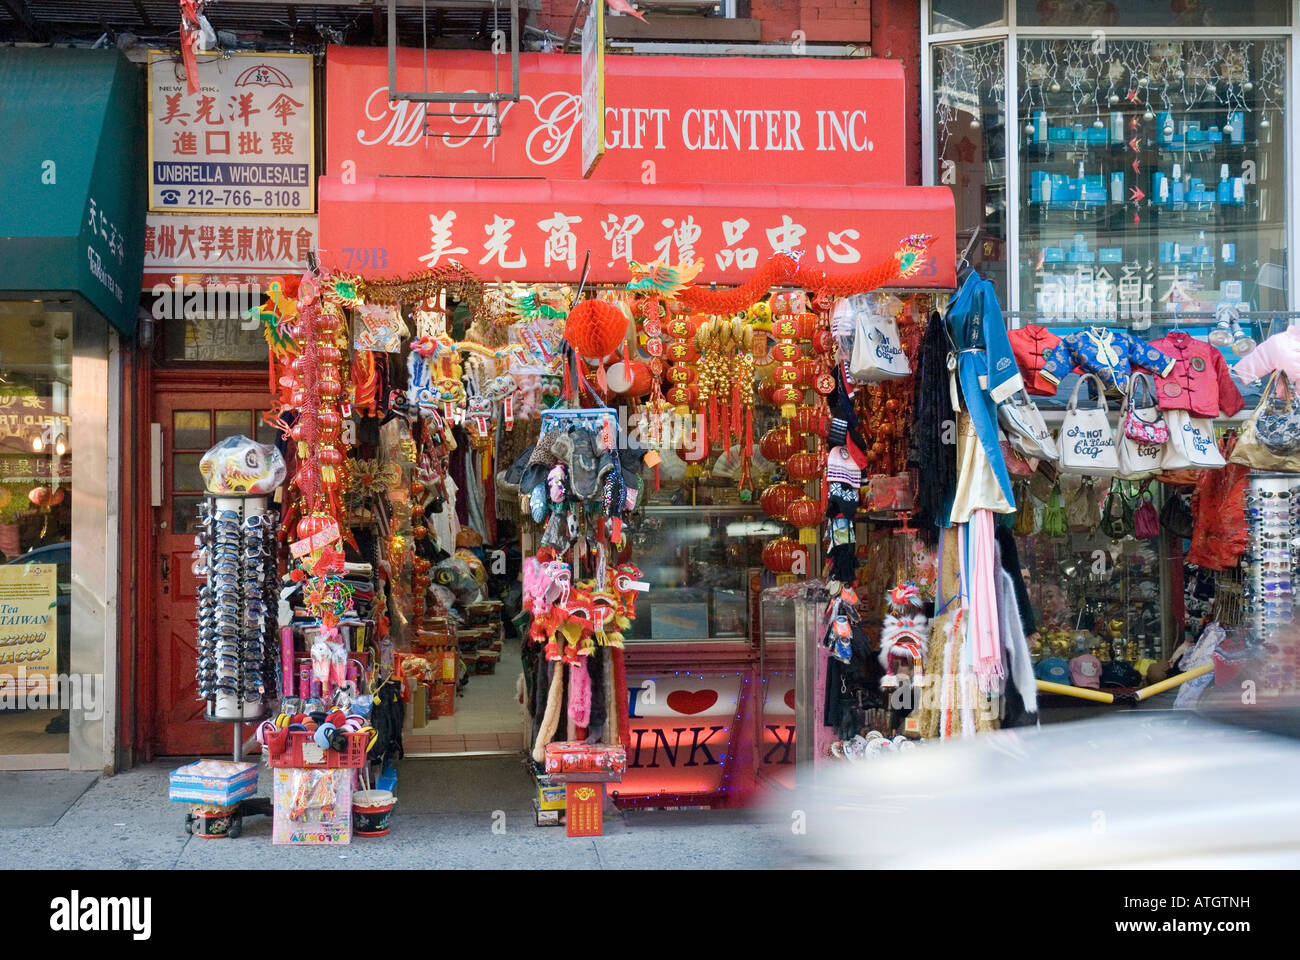 Street vendors in Chinatown, New York City Stock Photo